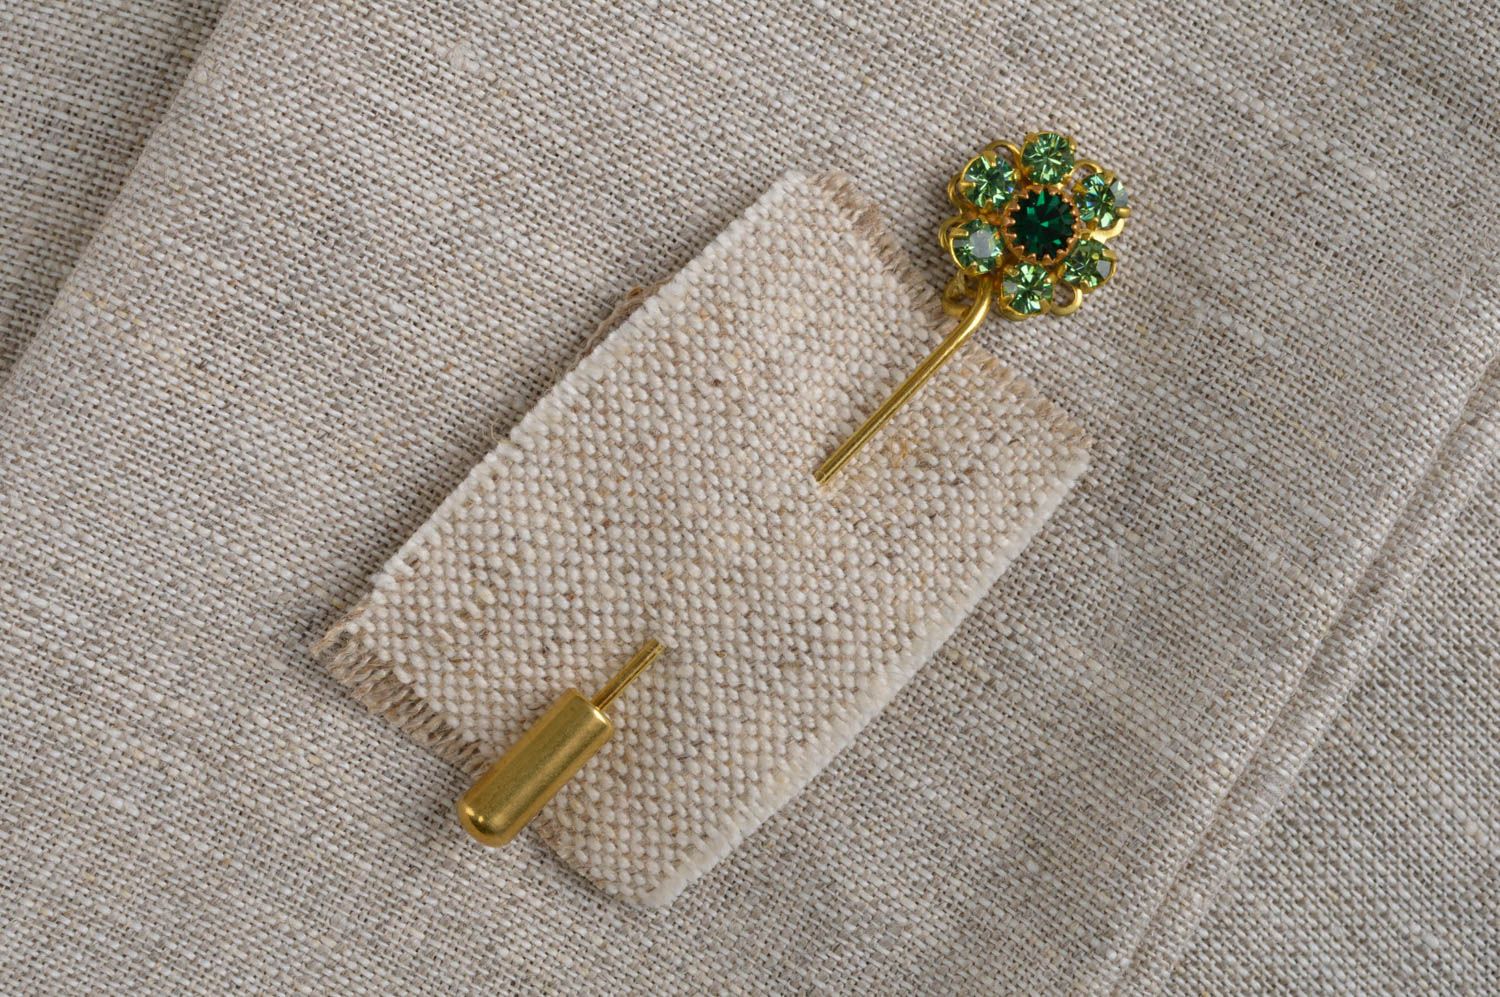 Stylish handmade metal brooch gemstone brooch jewelry cool jewelry designs photo 2